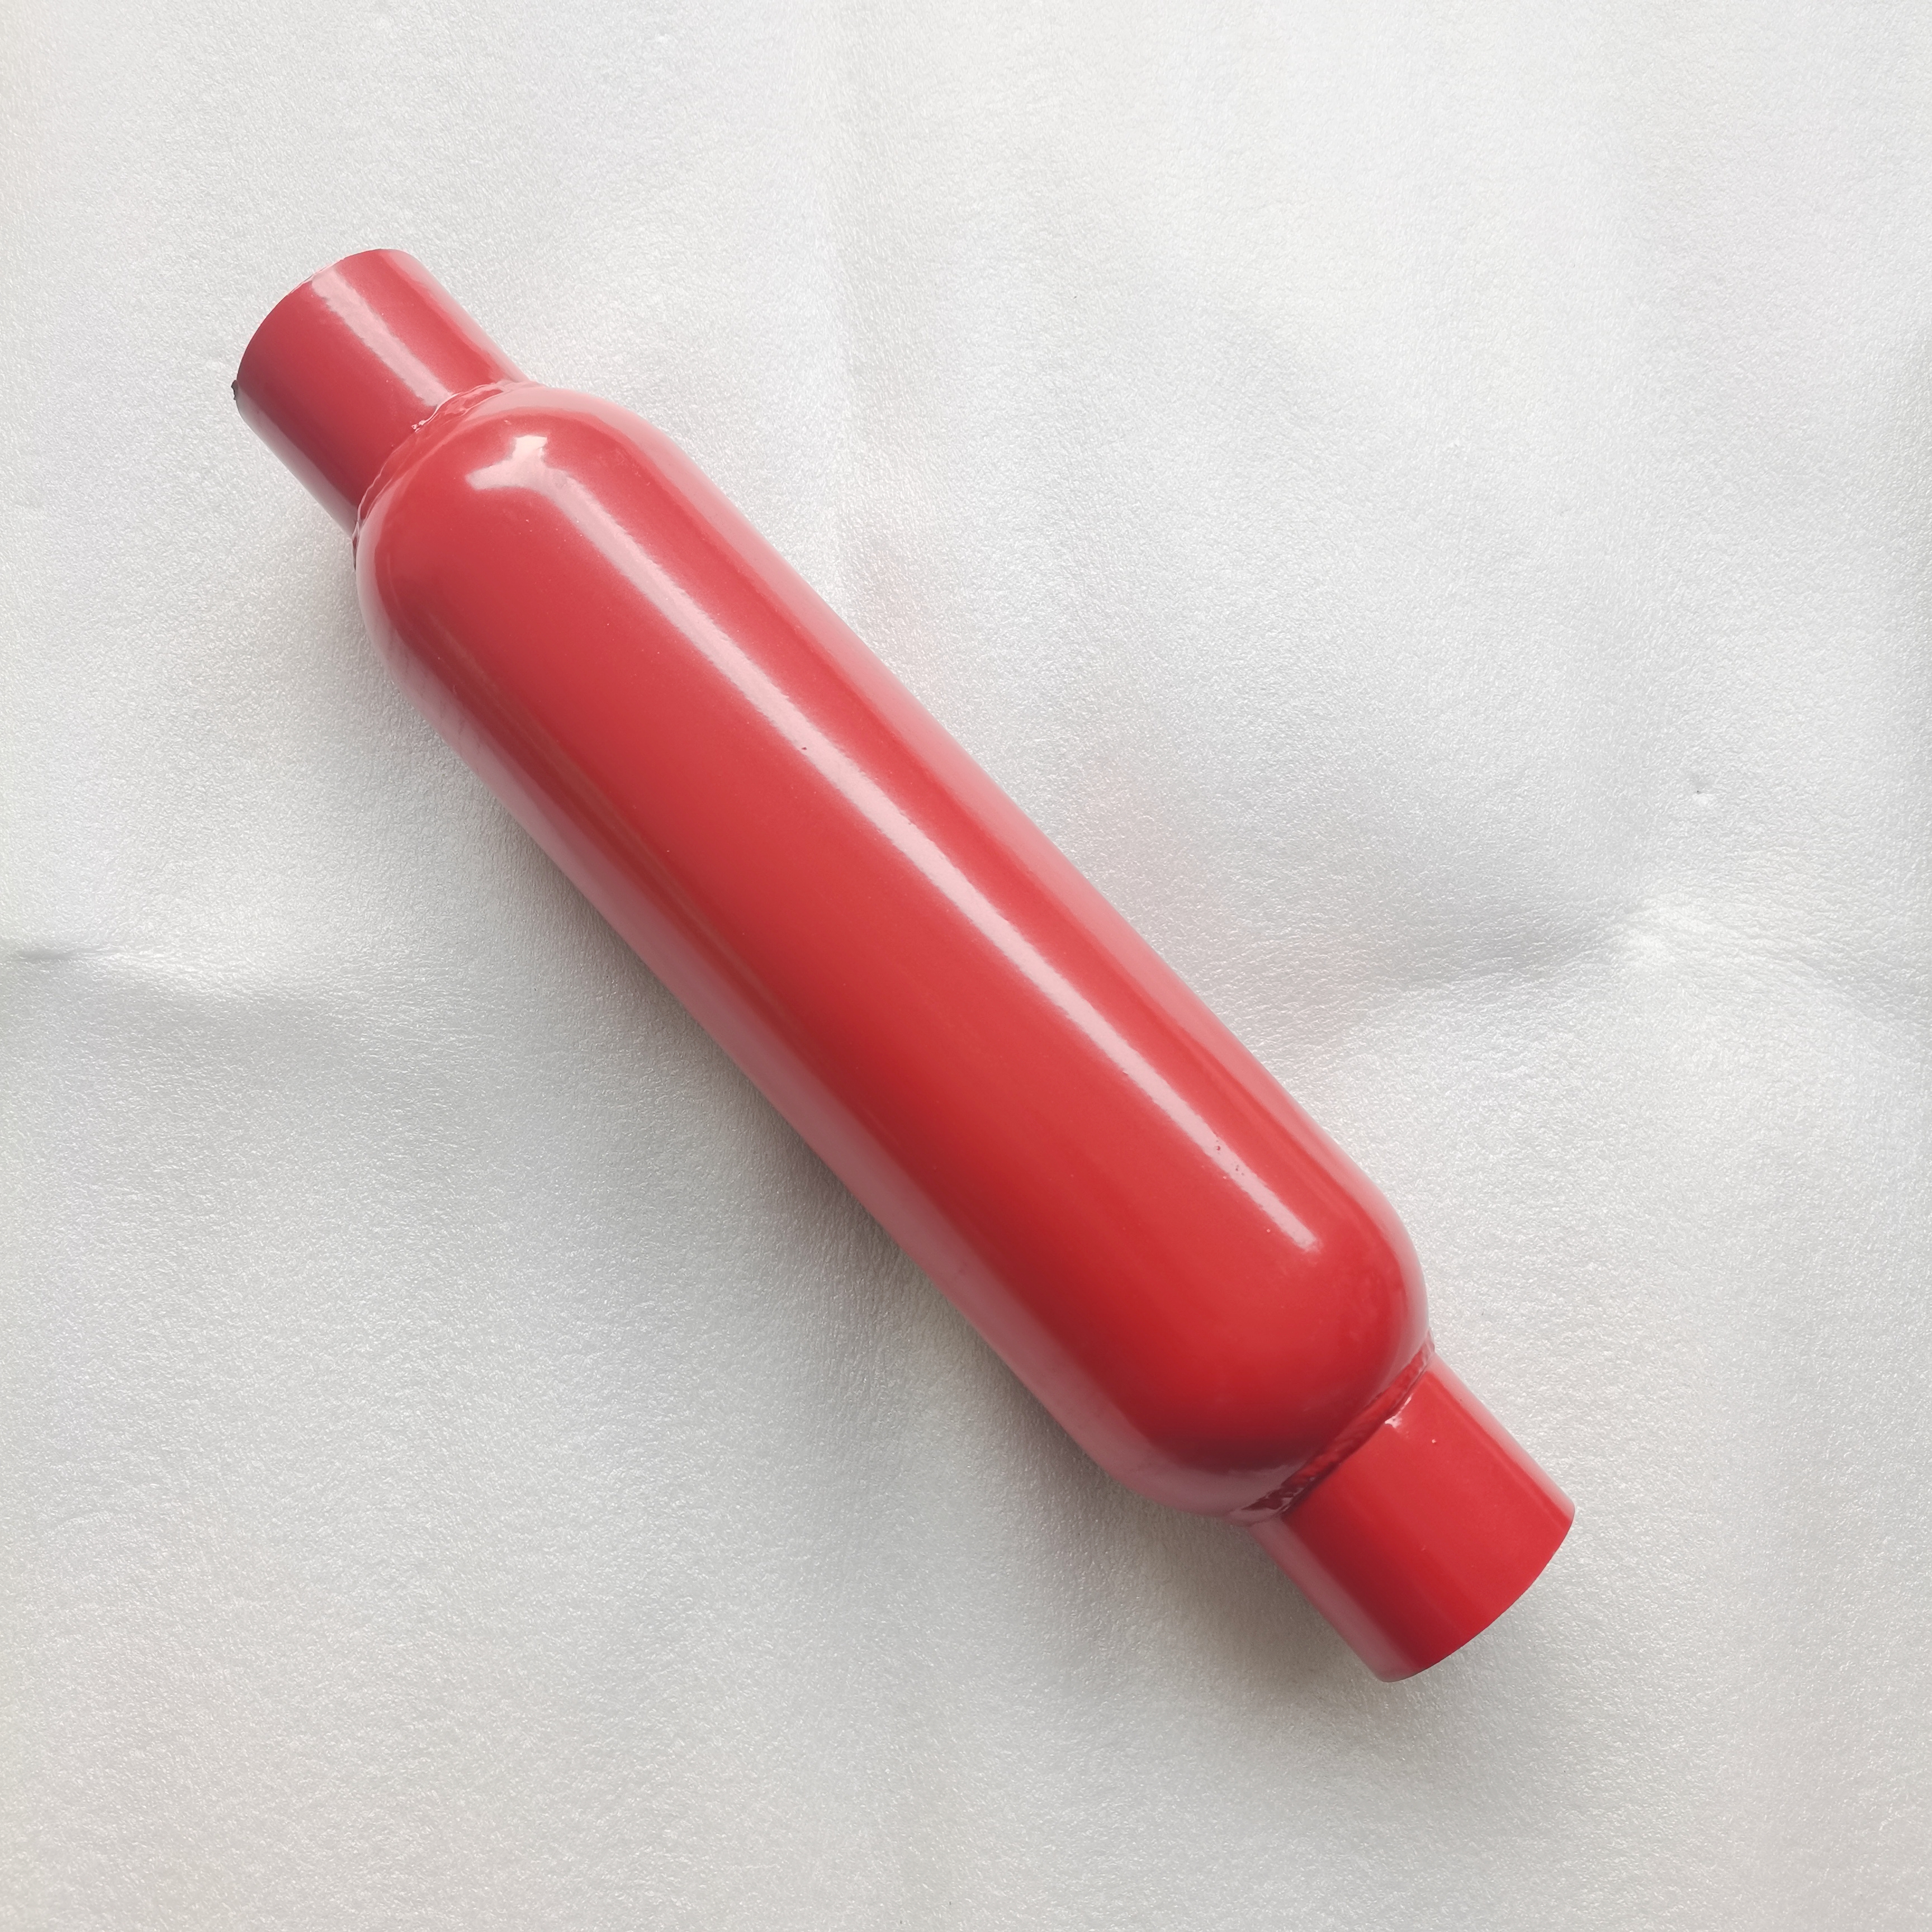 Glasspack Resonator Muffler in Red 